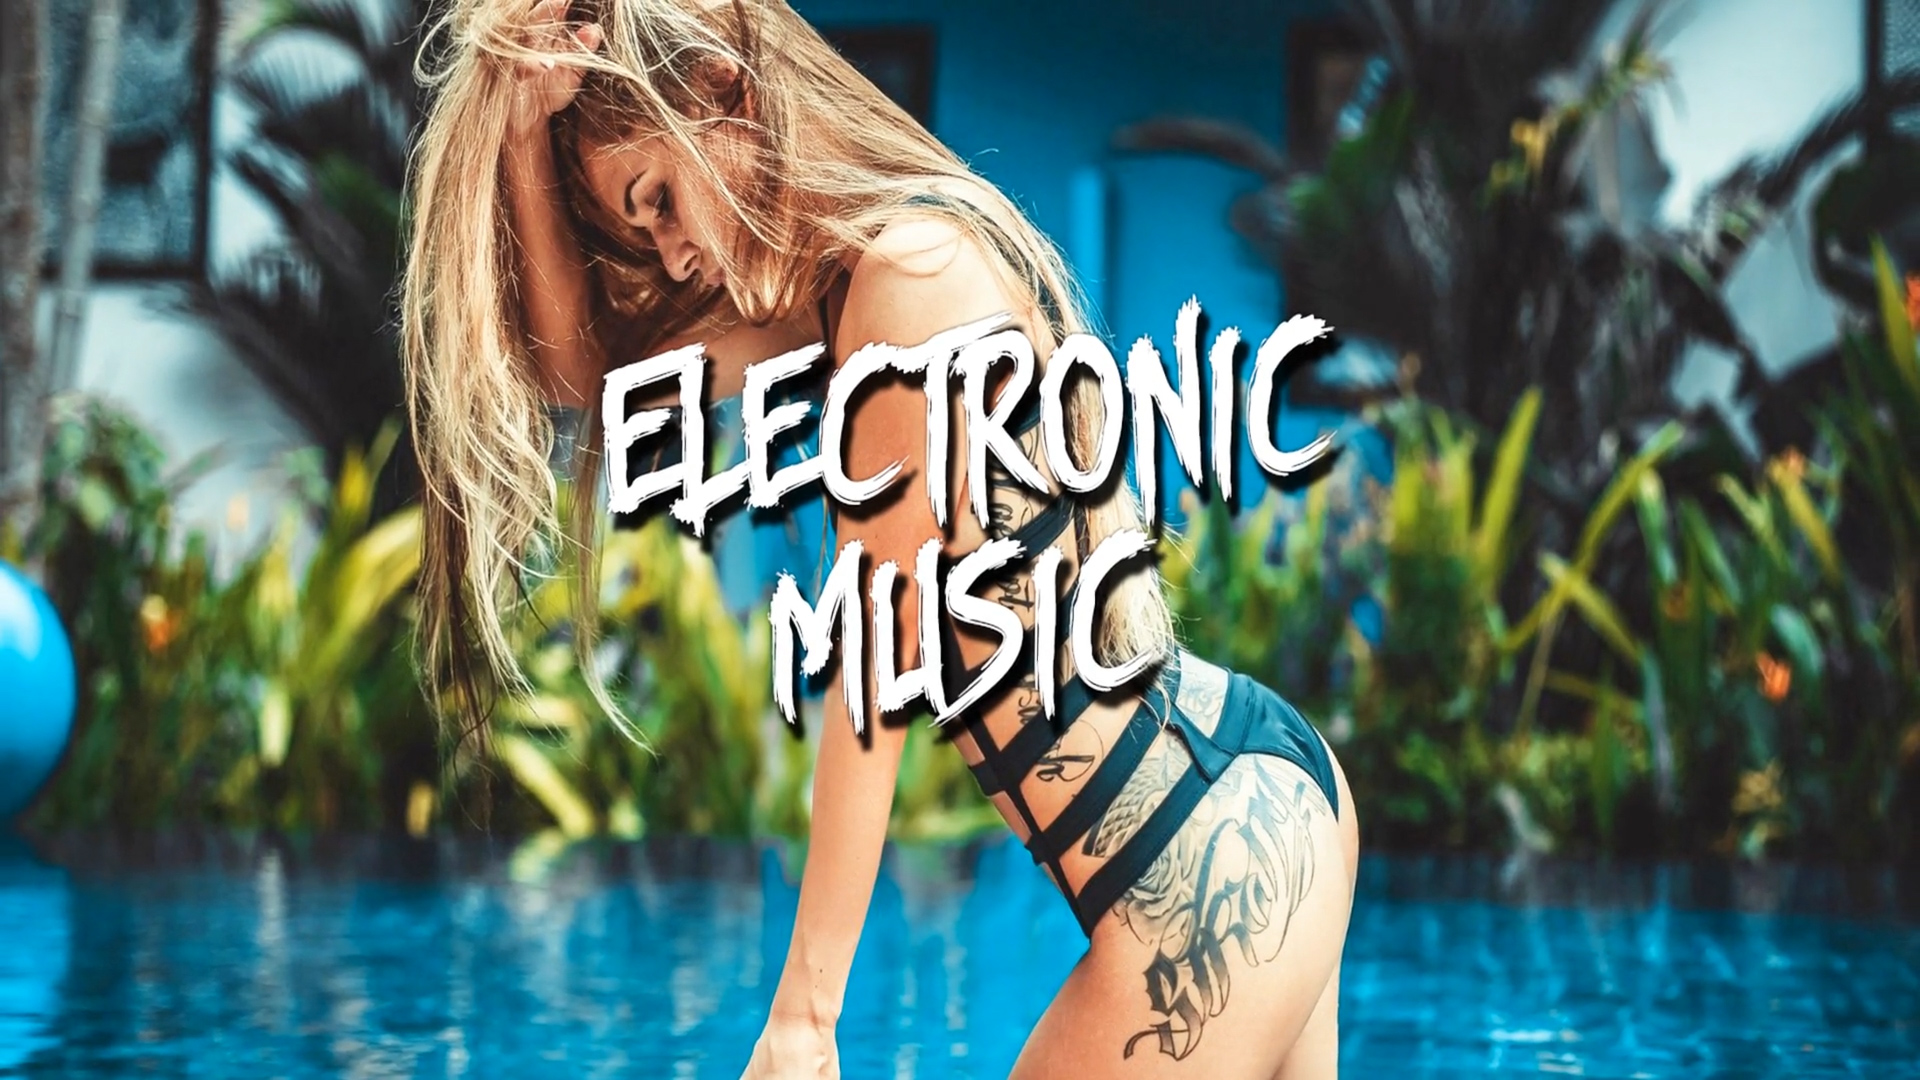 c152 - Cybernetic Love 「 Electronic Music 」 Музыка без АП | Copyright Free | Royalty Free Music